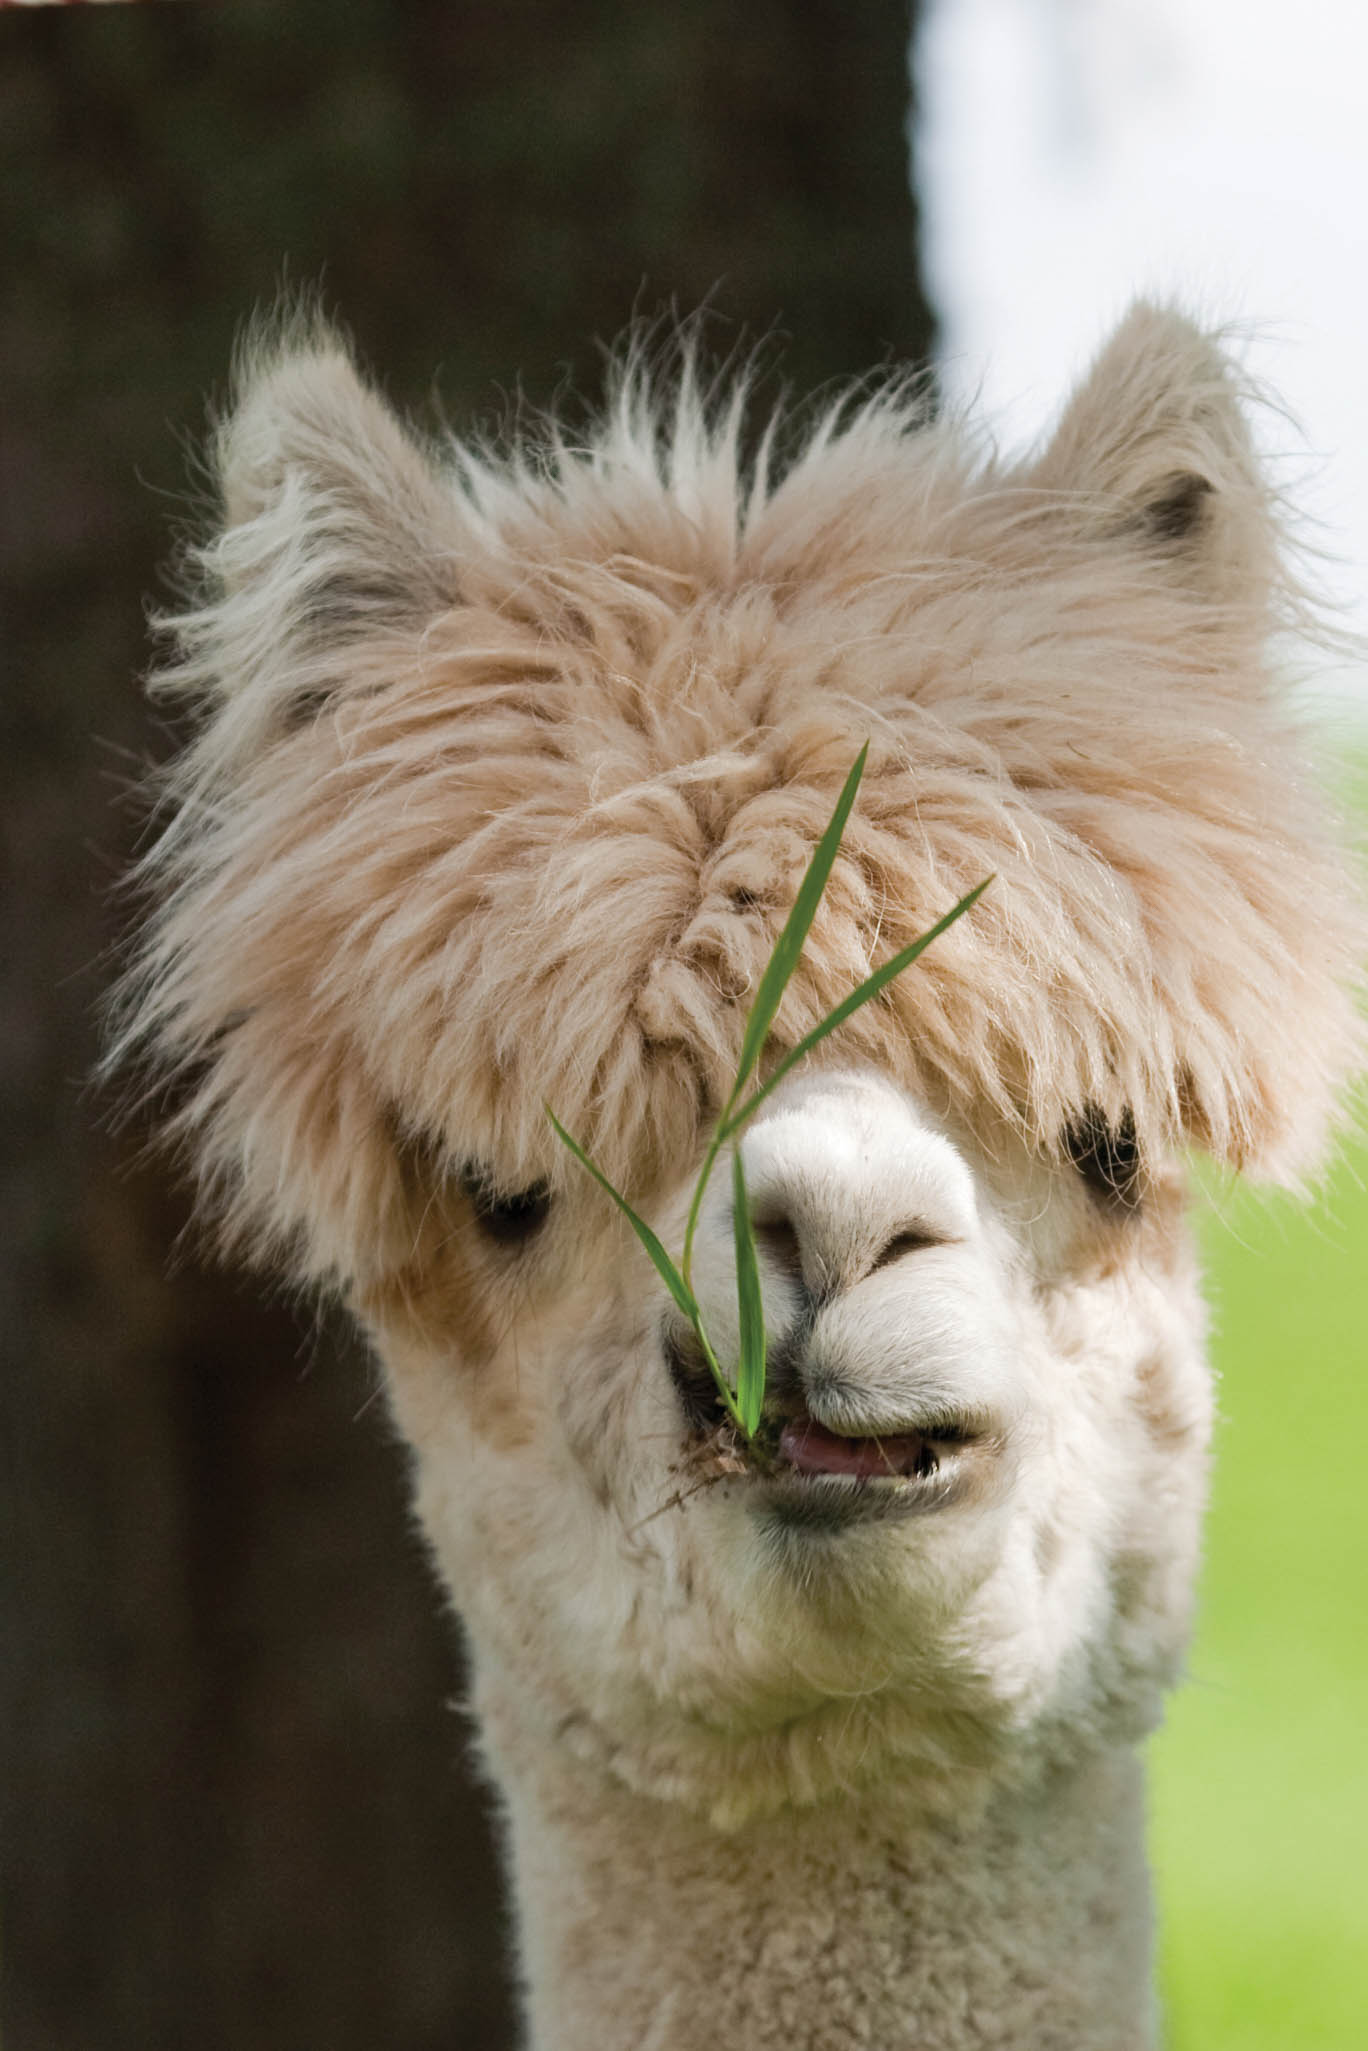 Grass-eating alpaca looks in camera.